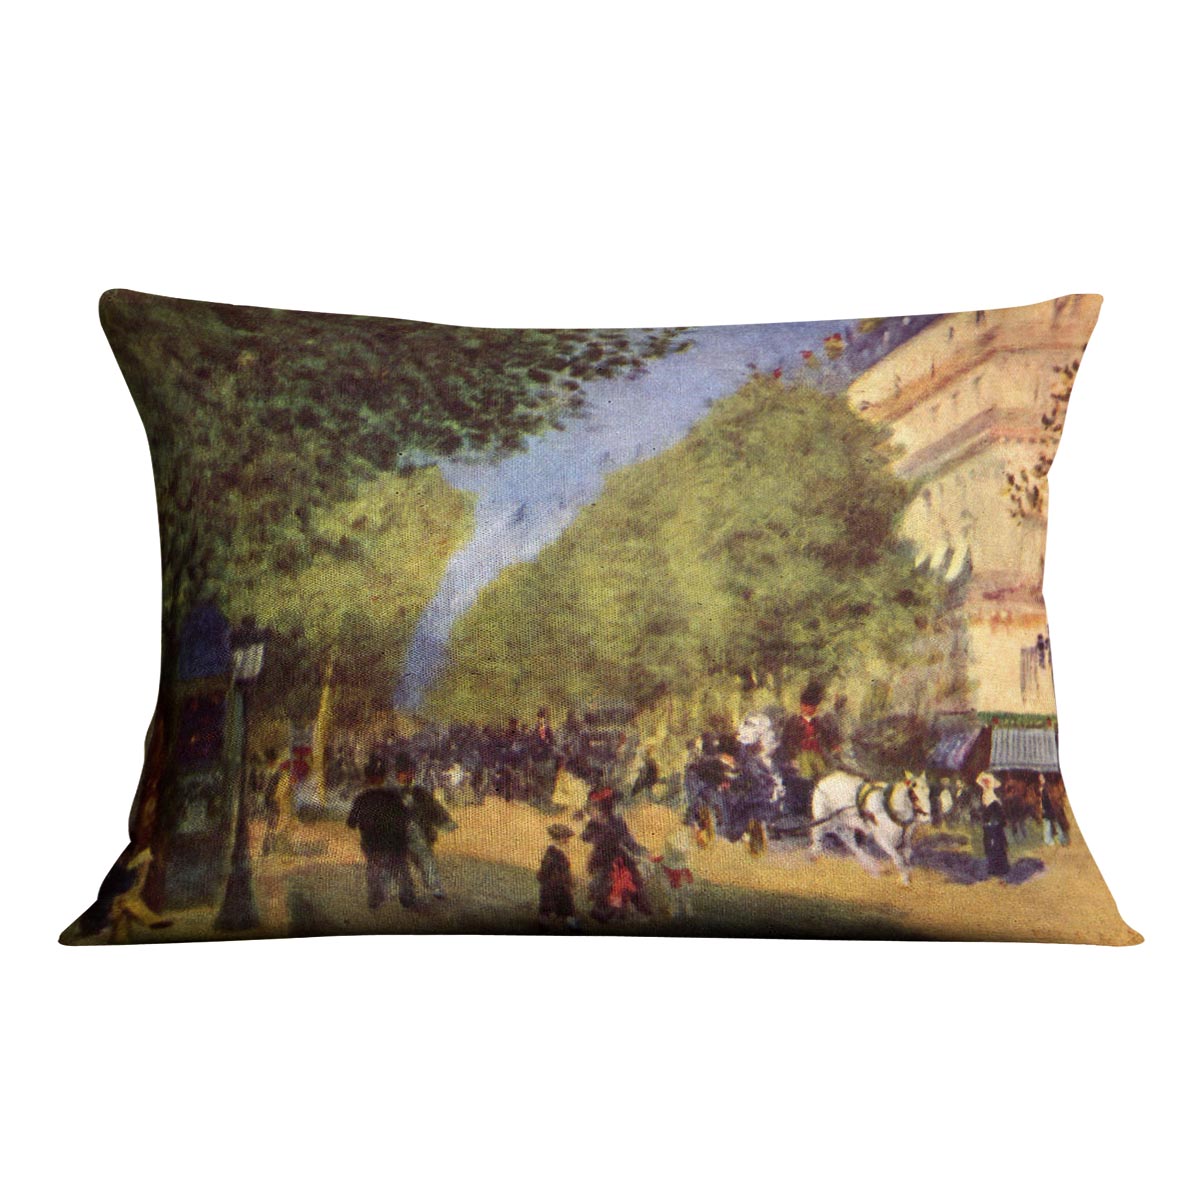 The big boulevards by Renoir Cushion